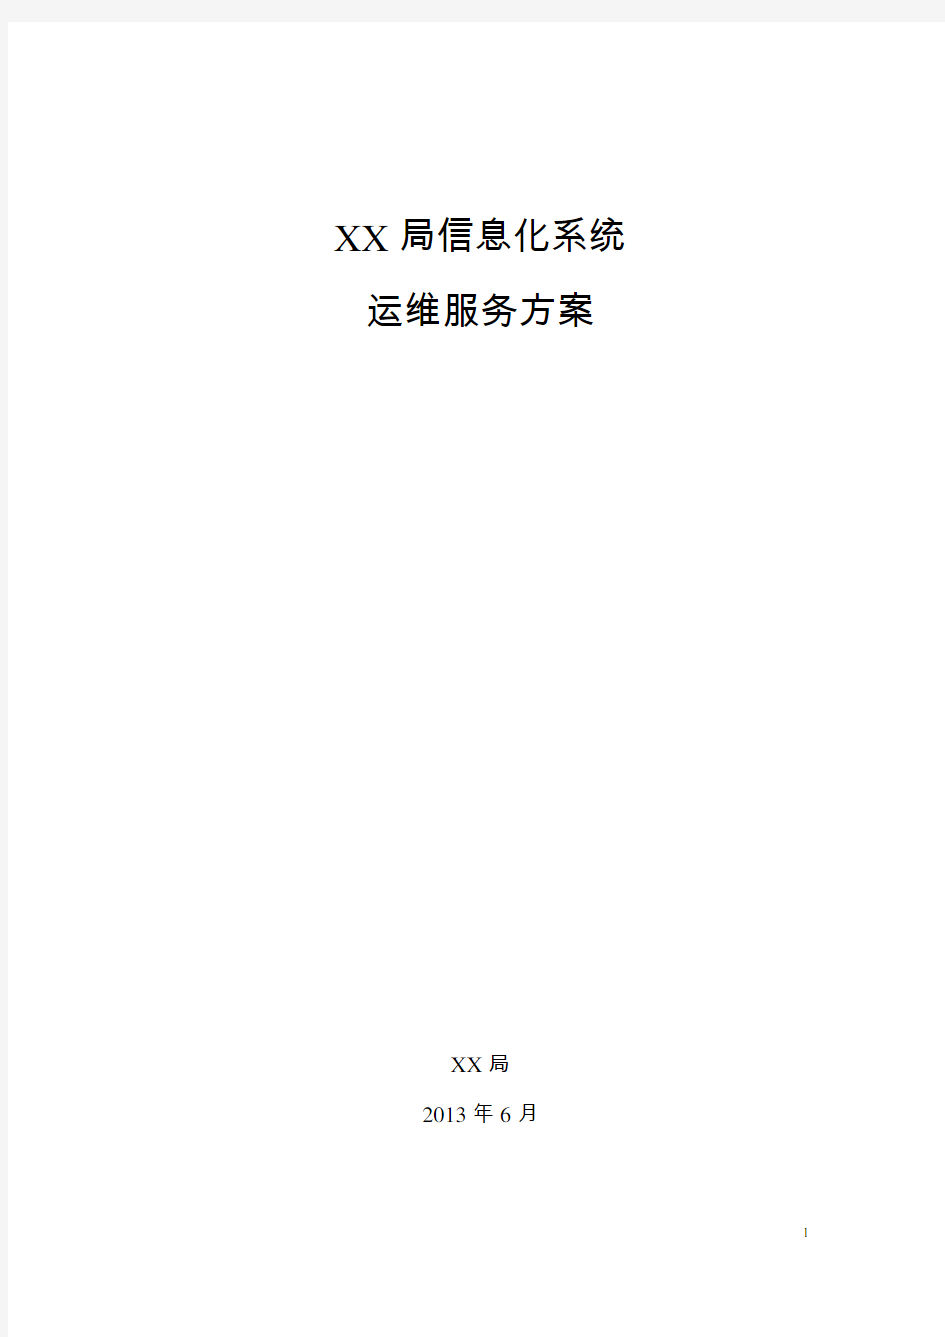 xxxx信息系统运维服务方案